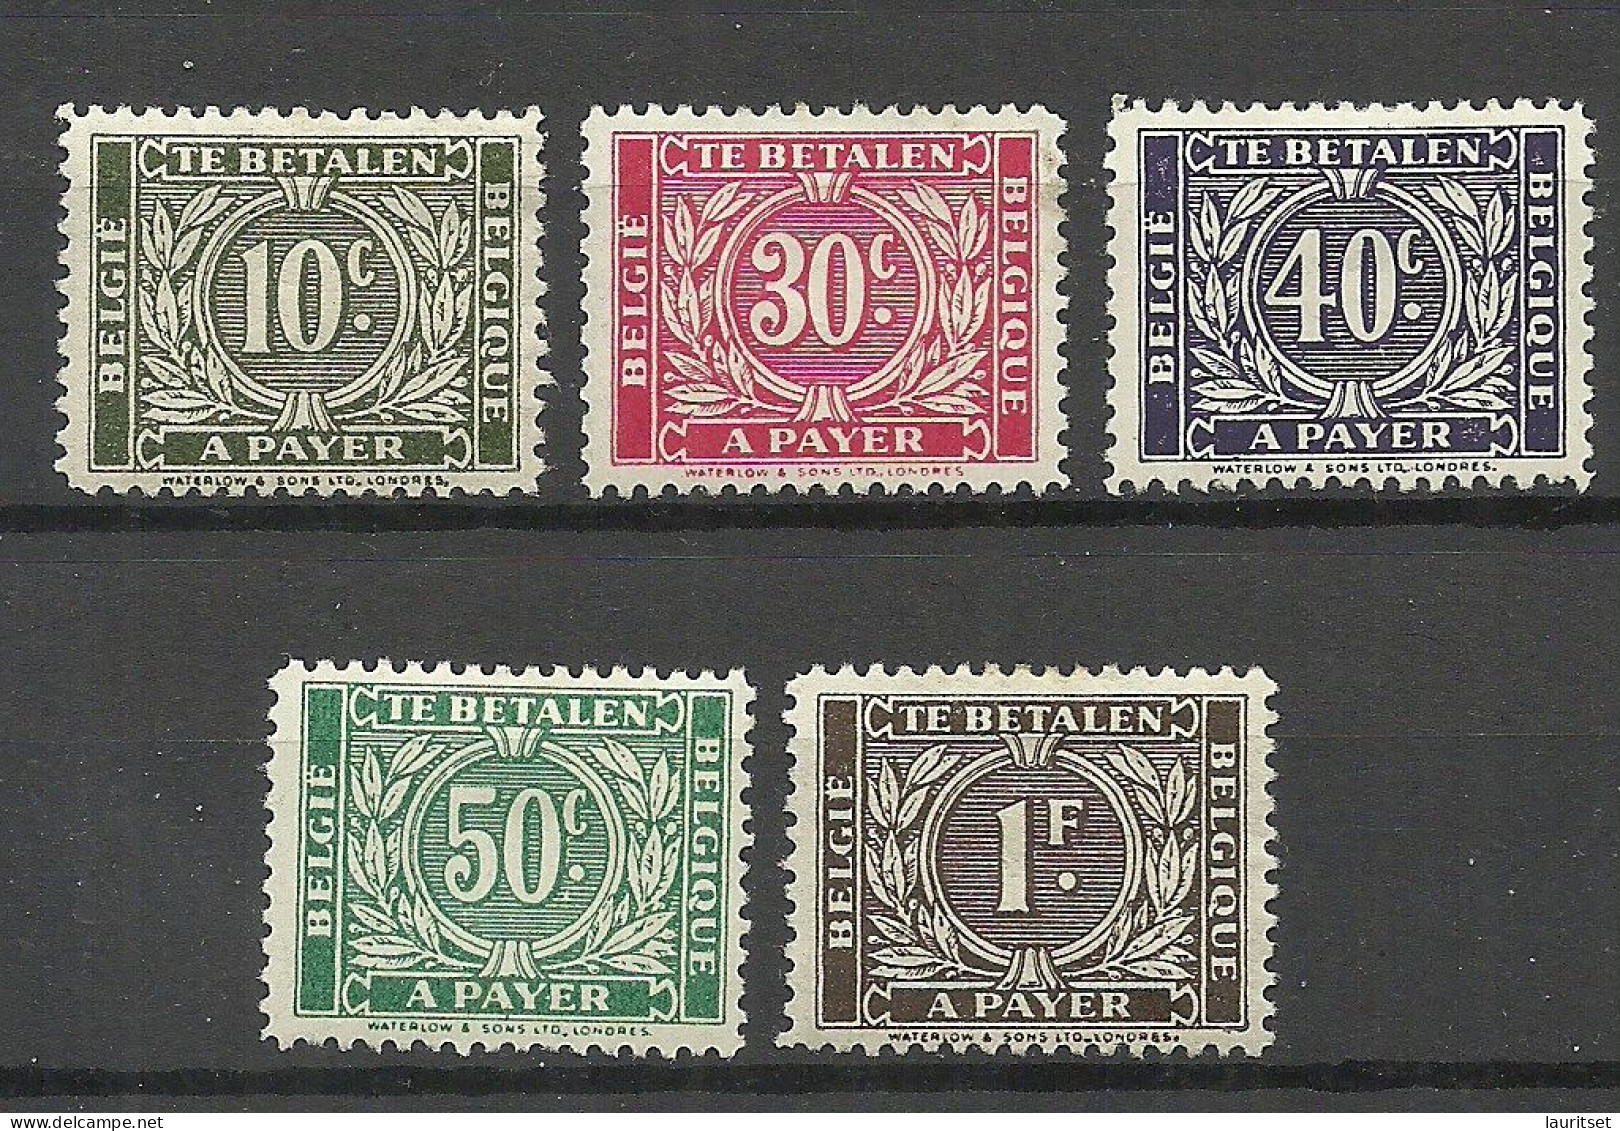 BELGIEN Belgium Belgique 1945 =5 Values From Set Michel 49 - 45 A Payer Te Betalen Portomarken Postage Due * - Timbres